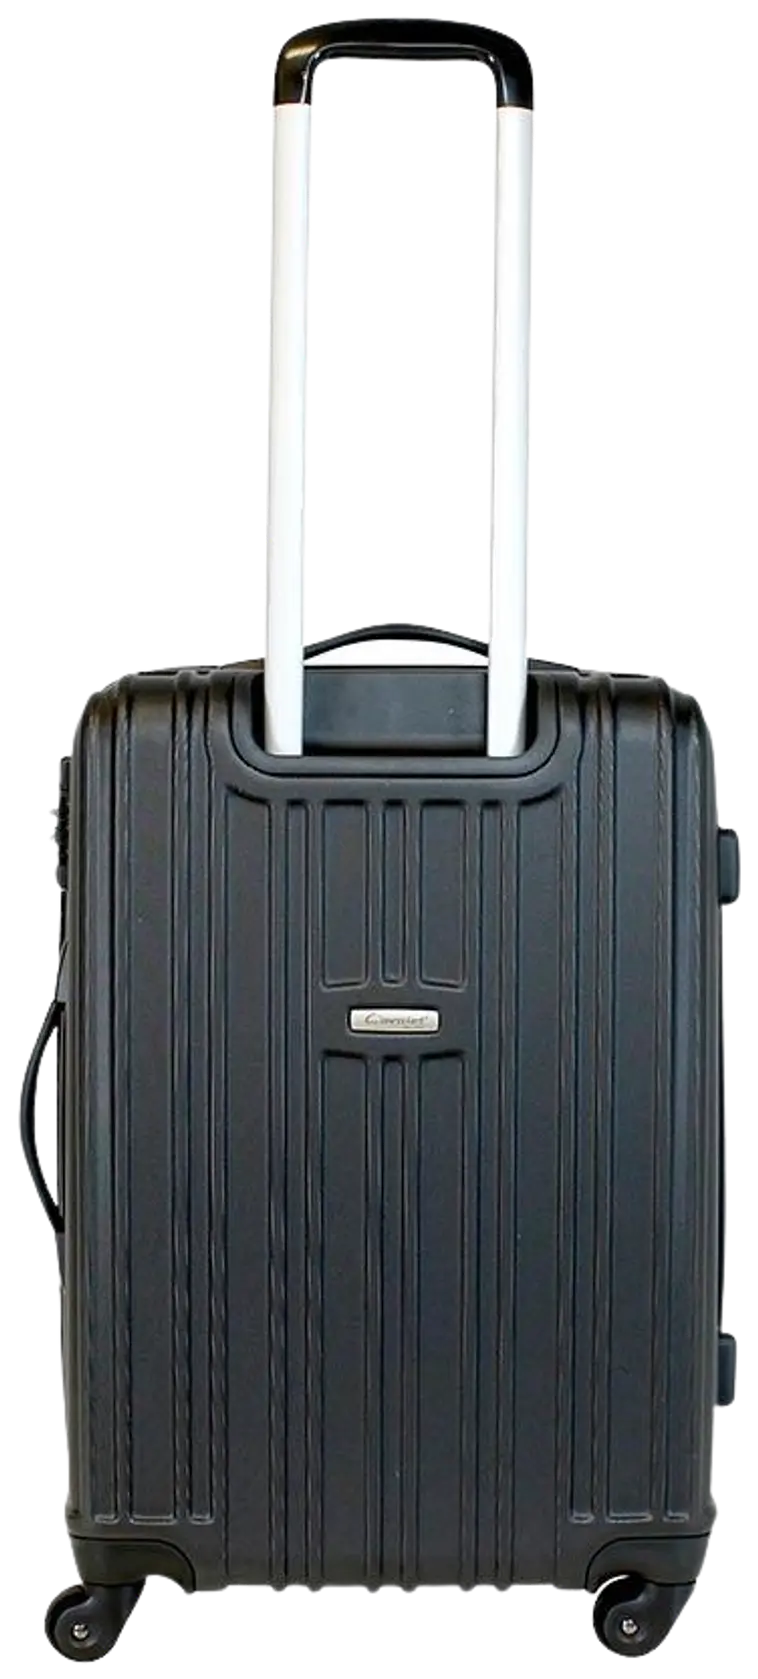 Cavalet Malibu matkalaukku M 65 cm, musta - 3